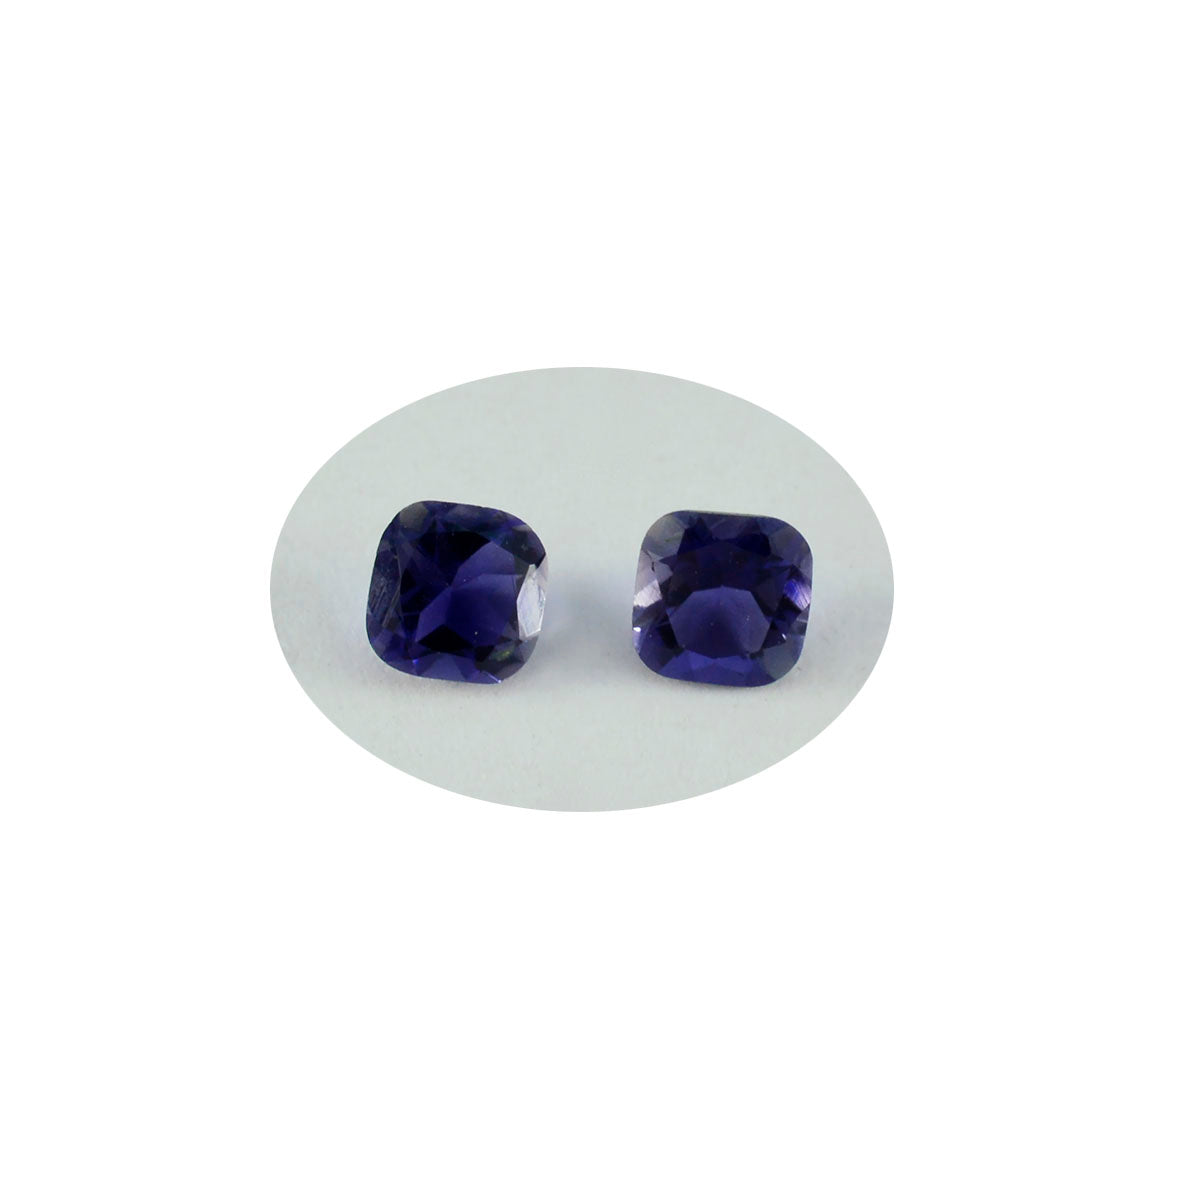 Riyogems 1PC Blue Iolite Faceted 8x8 mm Cushion Shape astonishing Quality Gems